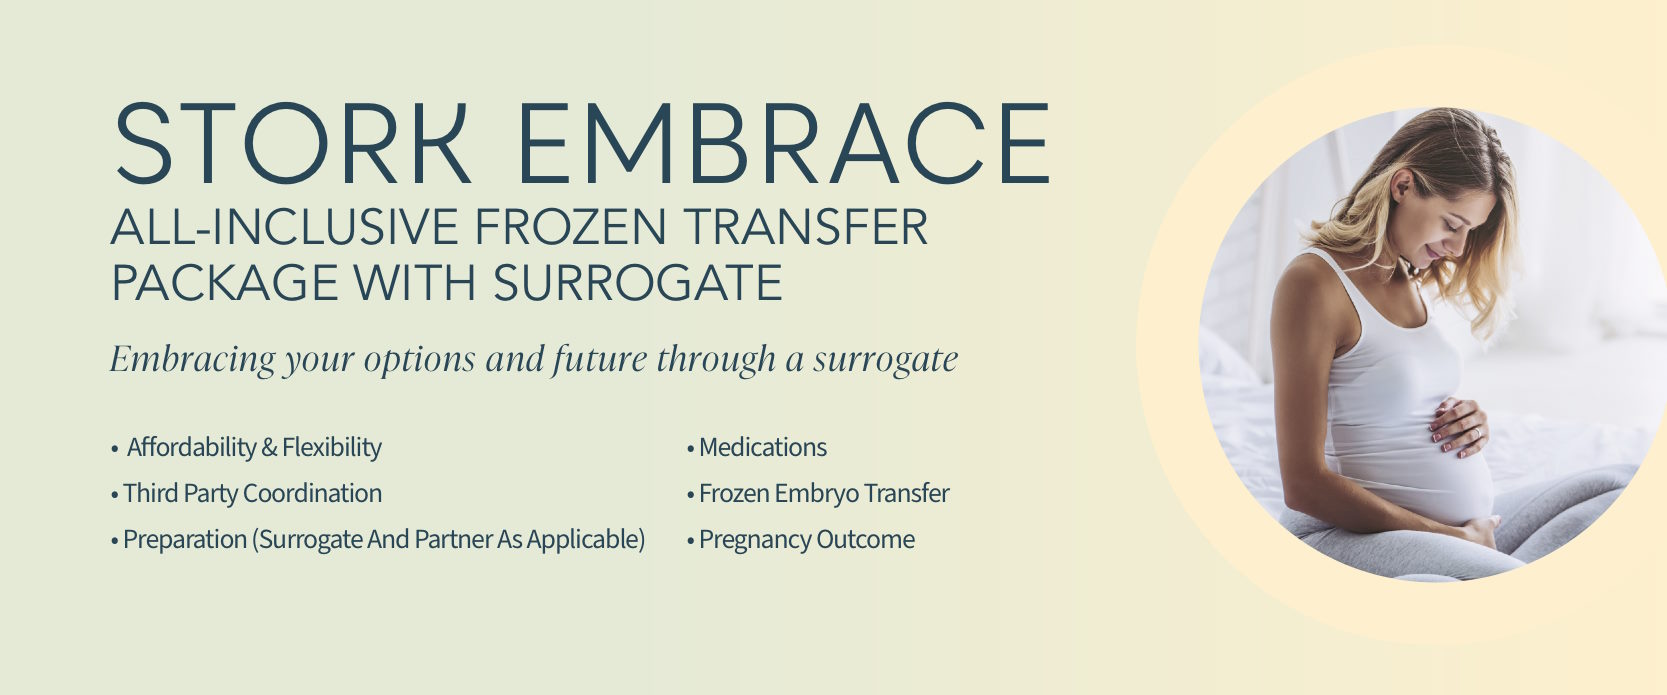 HRC Fertility Stork Embrace All-Inclusive Frozen Transfer with Surrogate Package